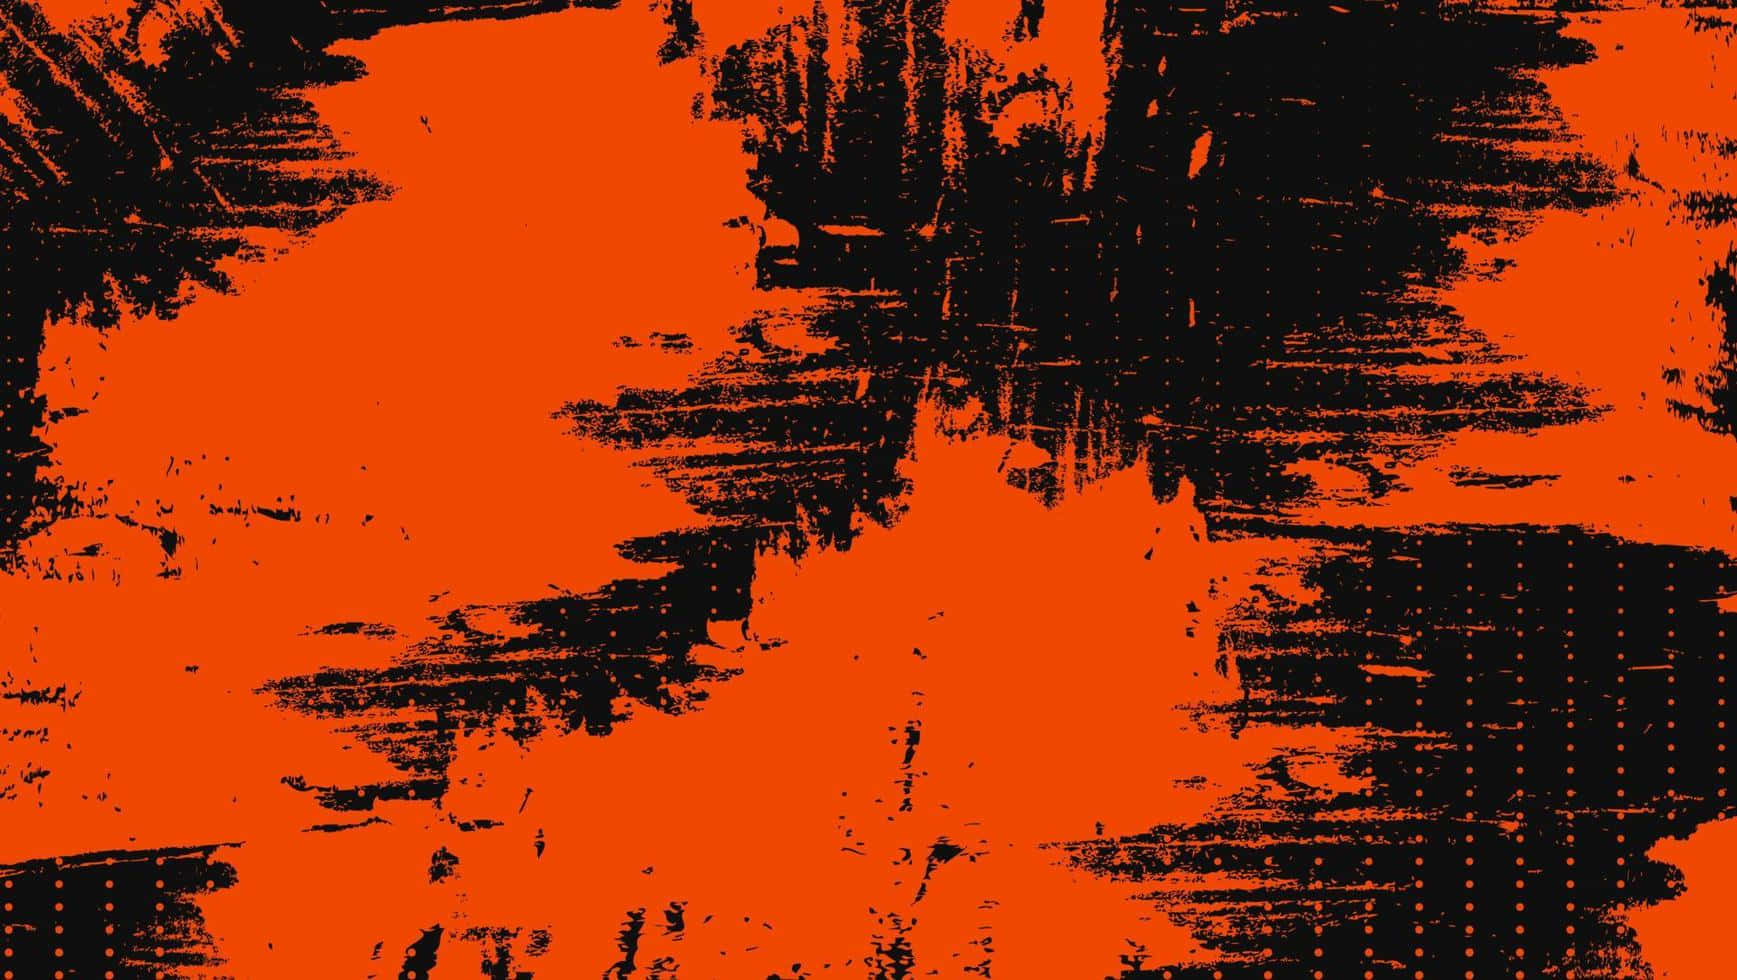 Vivid_ Orange_ Black_ Abstract_ Art.jpg Wallpaper